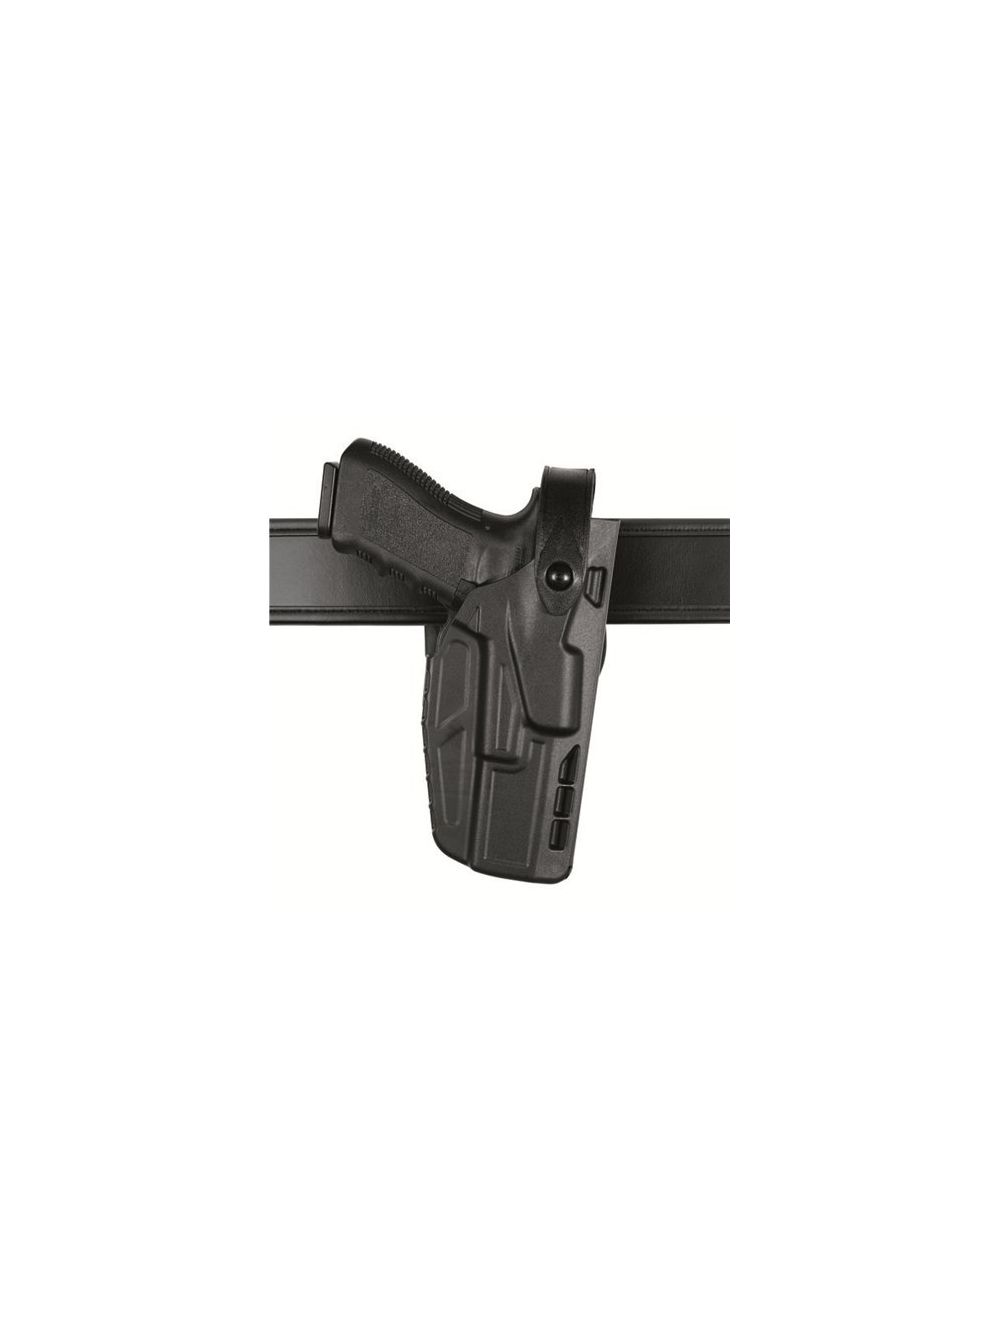 Model 7280 7TS SLS Mid-Ride, Level II Retention Duty Holster for Glock 17 w/ Light